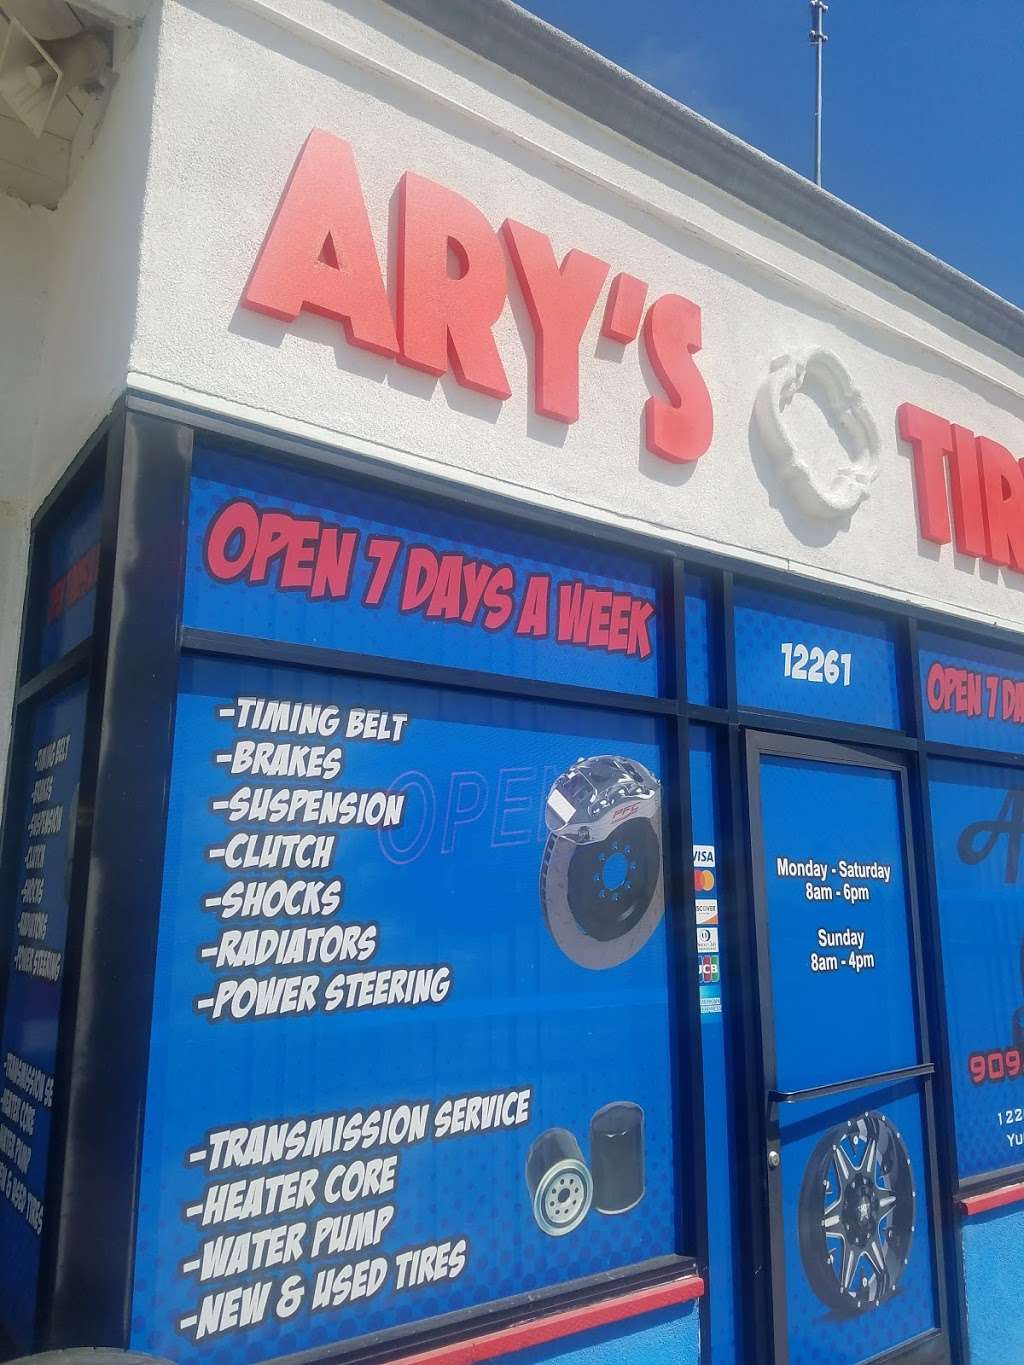 Arys Tires | 1601 N Mt Vernon Ave, San Bernardino, CA 92411, USA | Phone: (909) 379-9250